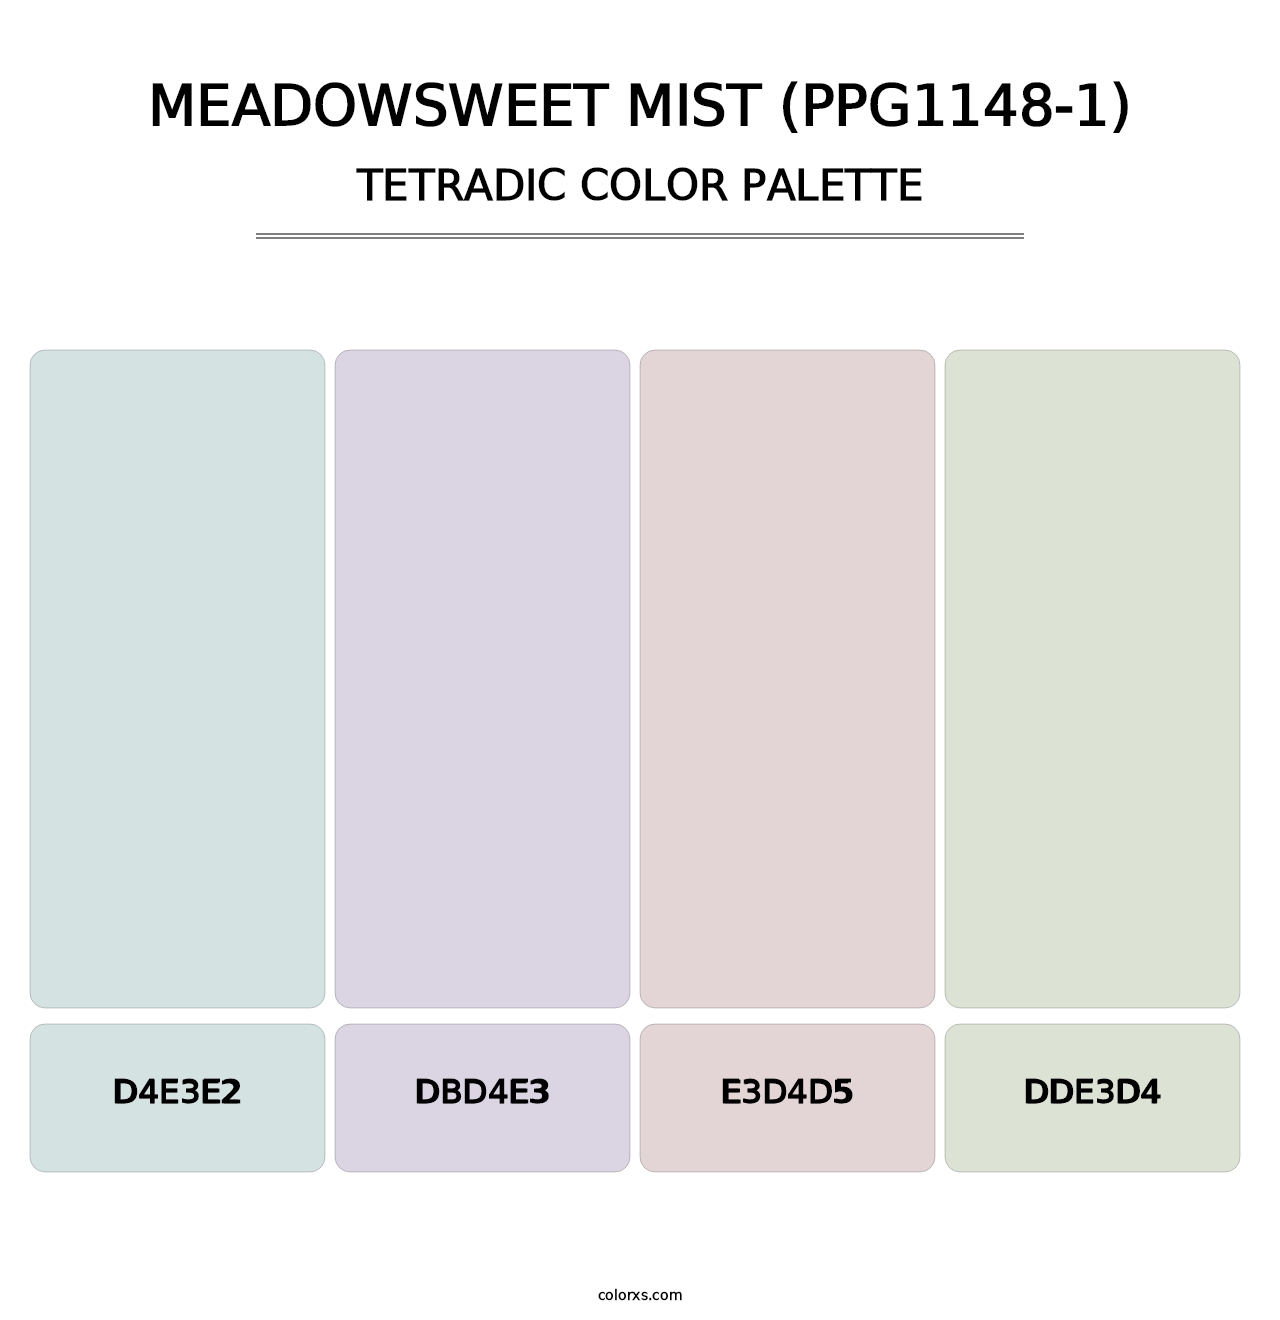 Meadowsweet Mist (PPG1148-1) - Tetradic Color Palette